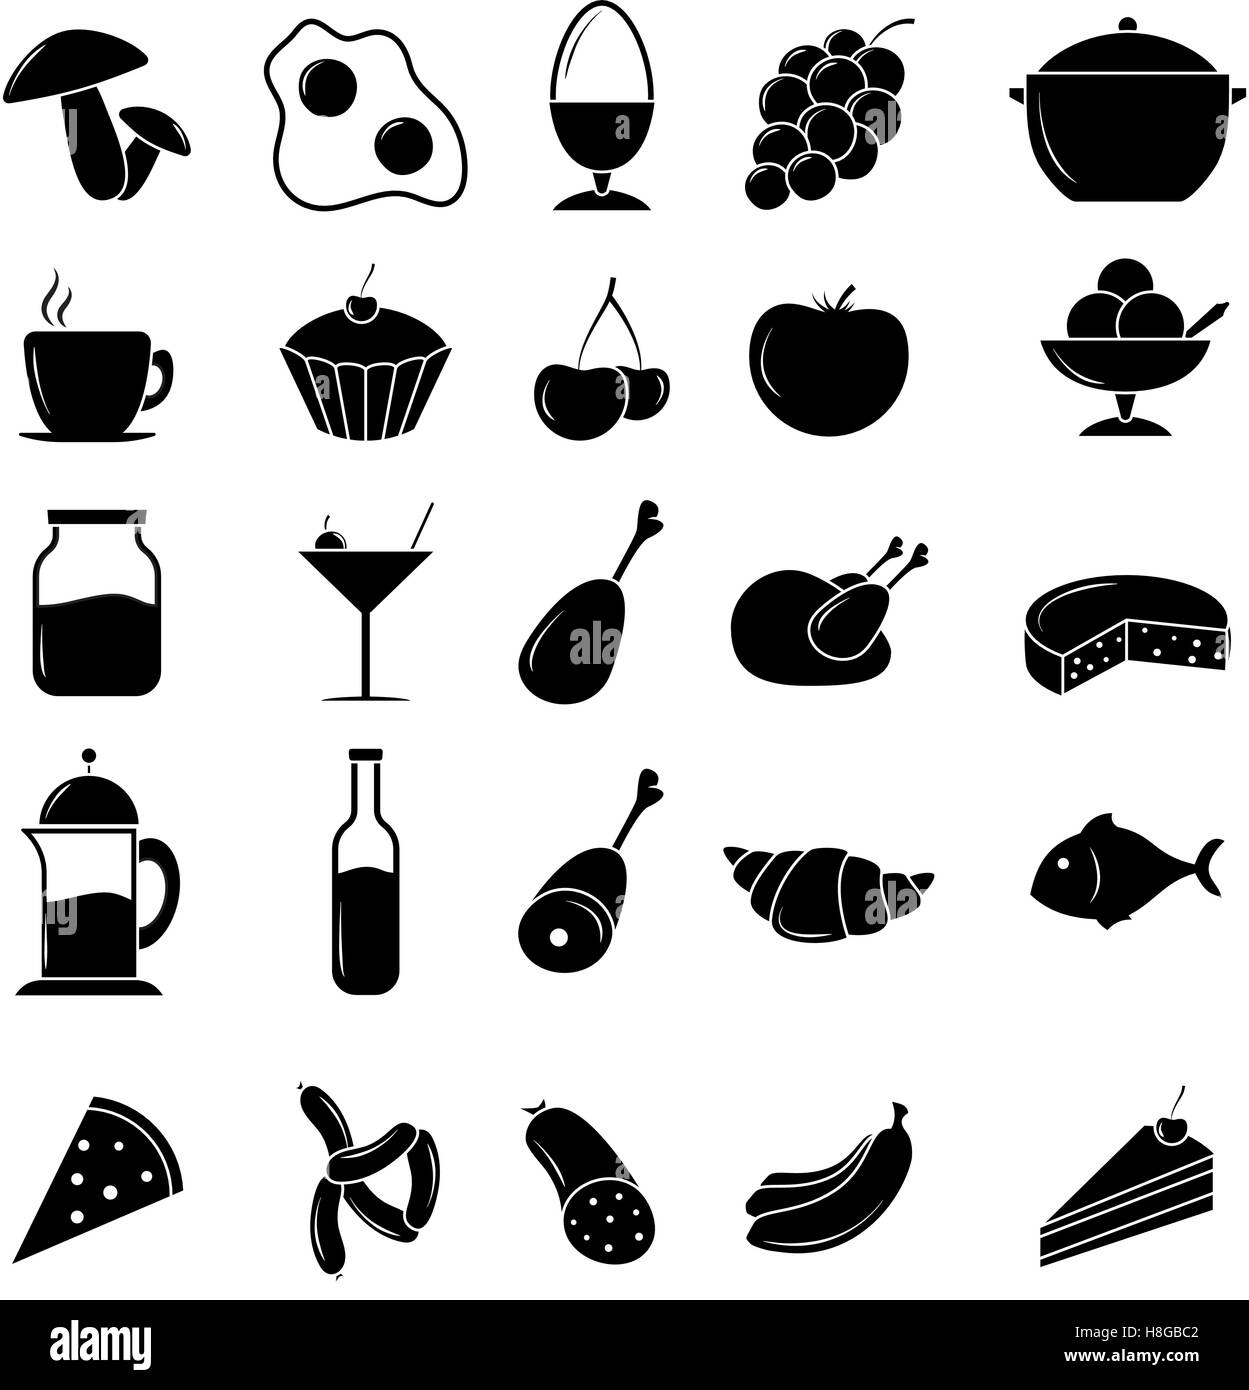 Vector illustration. Food icon set. Illustration vecteur EPS 10 Illustration de Vecteur